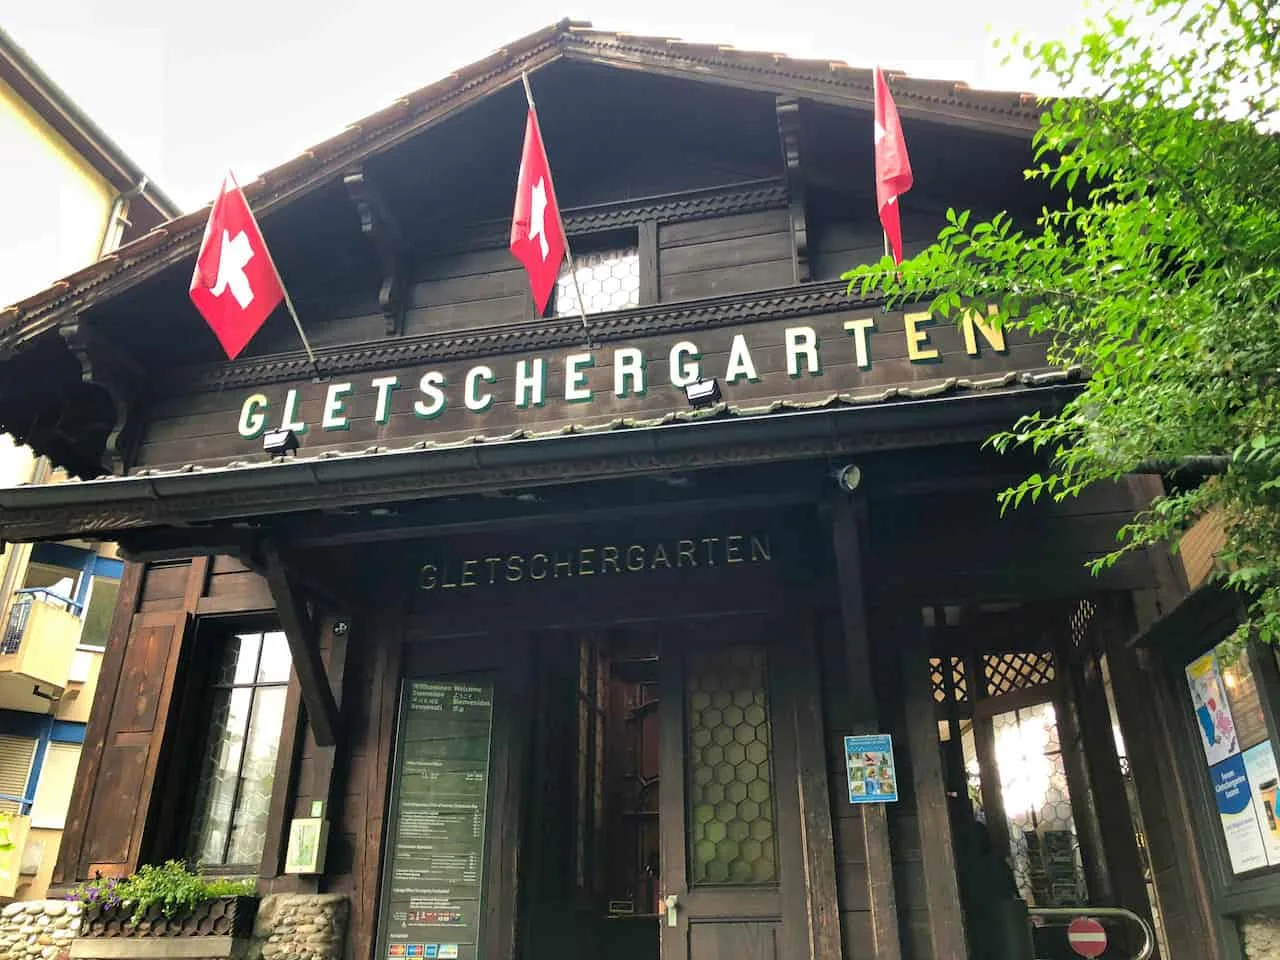 Gletschergarten Entrance